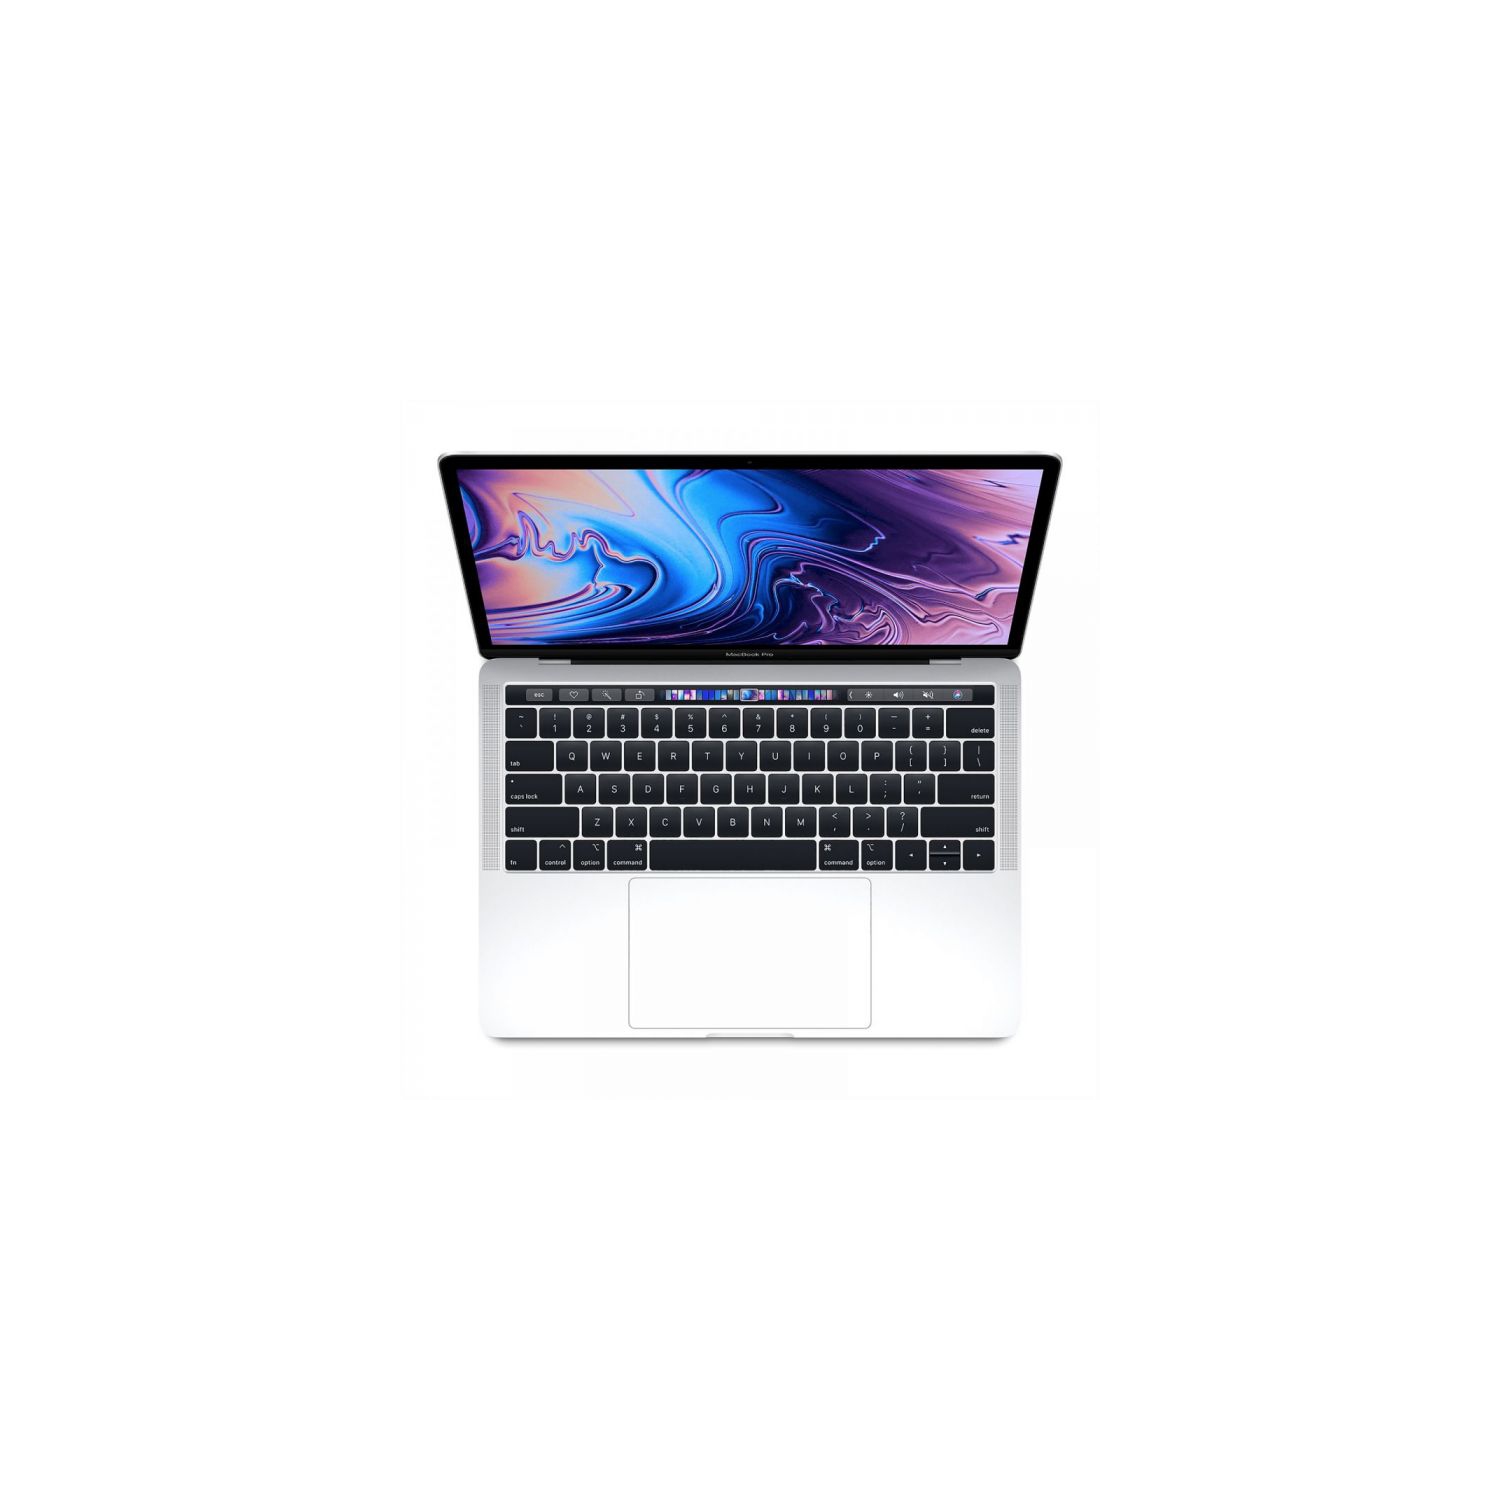 Refurbished (Excellent) - Apple MacBook Pro Retina ( 15.4 inch 2018 ) 2.9GHz Intel Core i9 6-CORE, 16GB RAM, 1TB, Silver (Grade A+ 10/10 Condition)